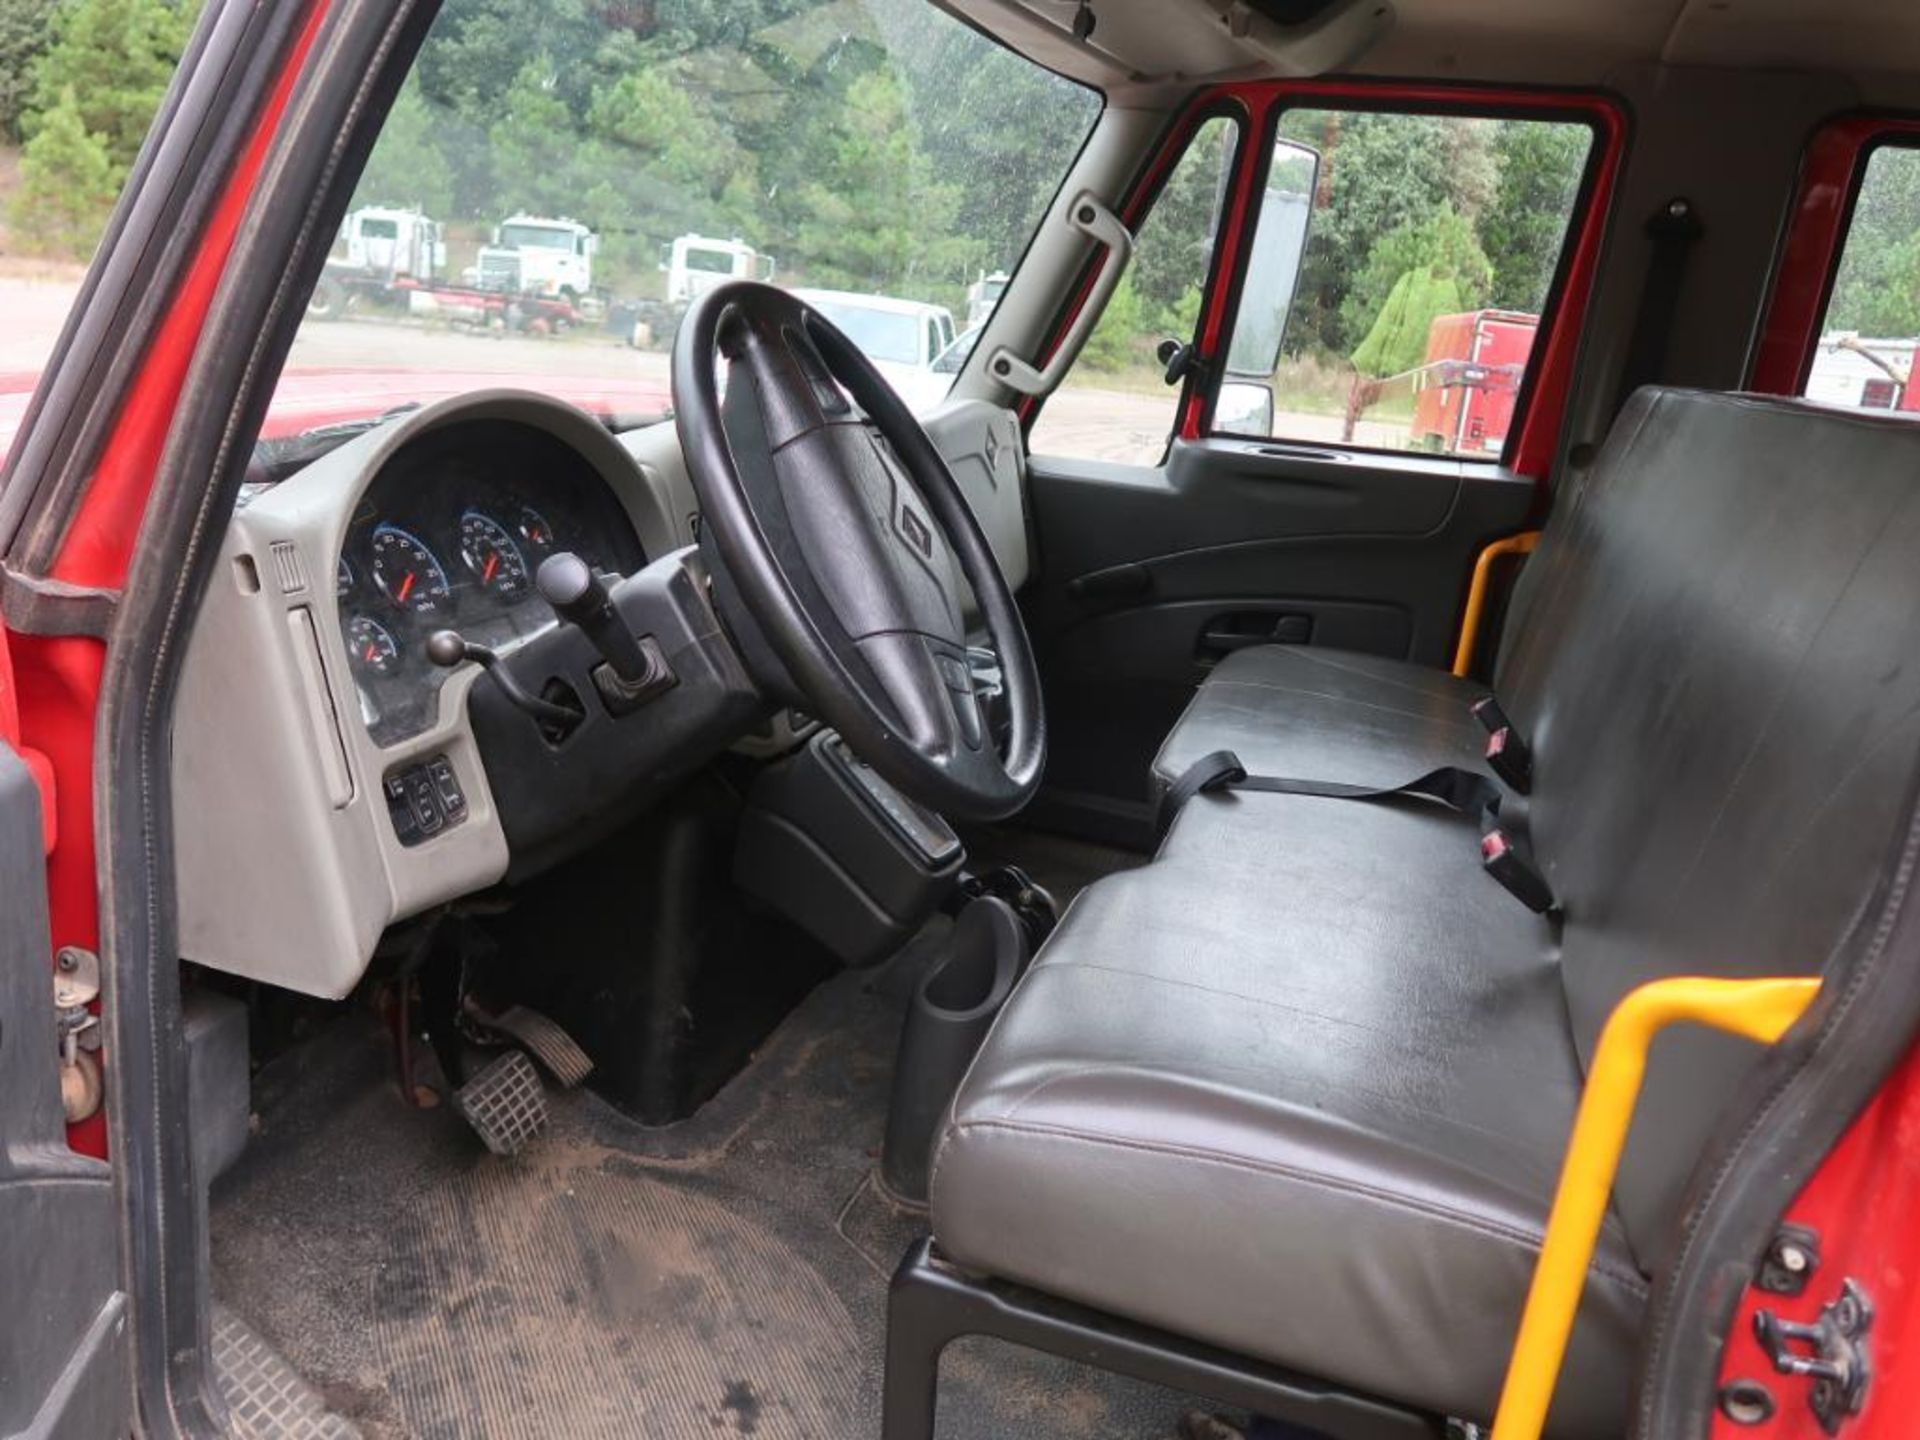 2015 International 4x4 Crew Cab Flatbed Roustabout Truck Model TerraStar SFA, VIN 1HTKPSKK4FH731882, - Image 7 of 9